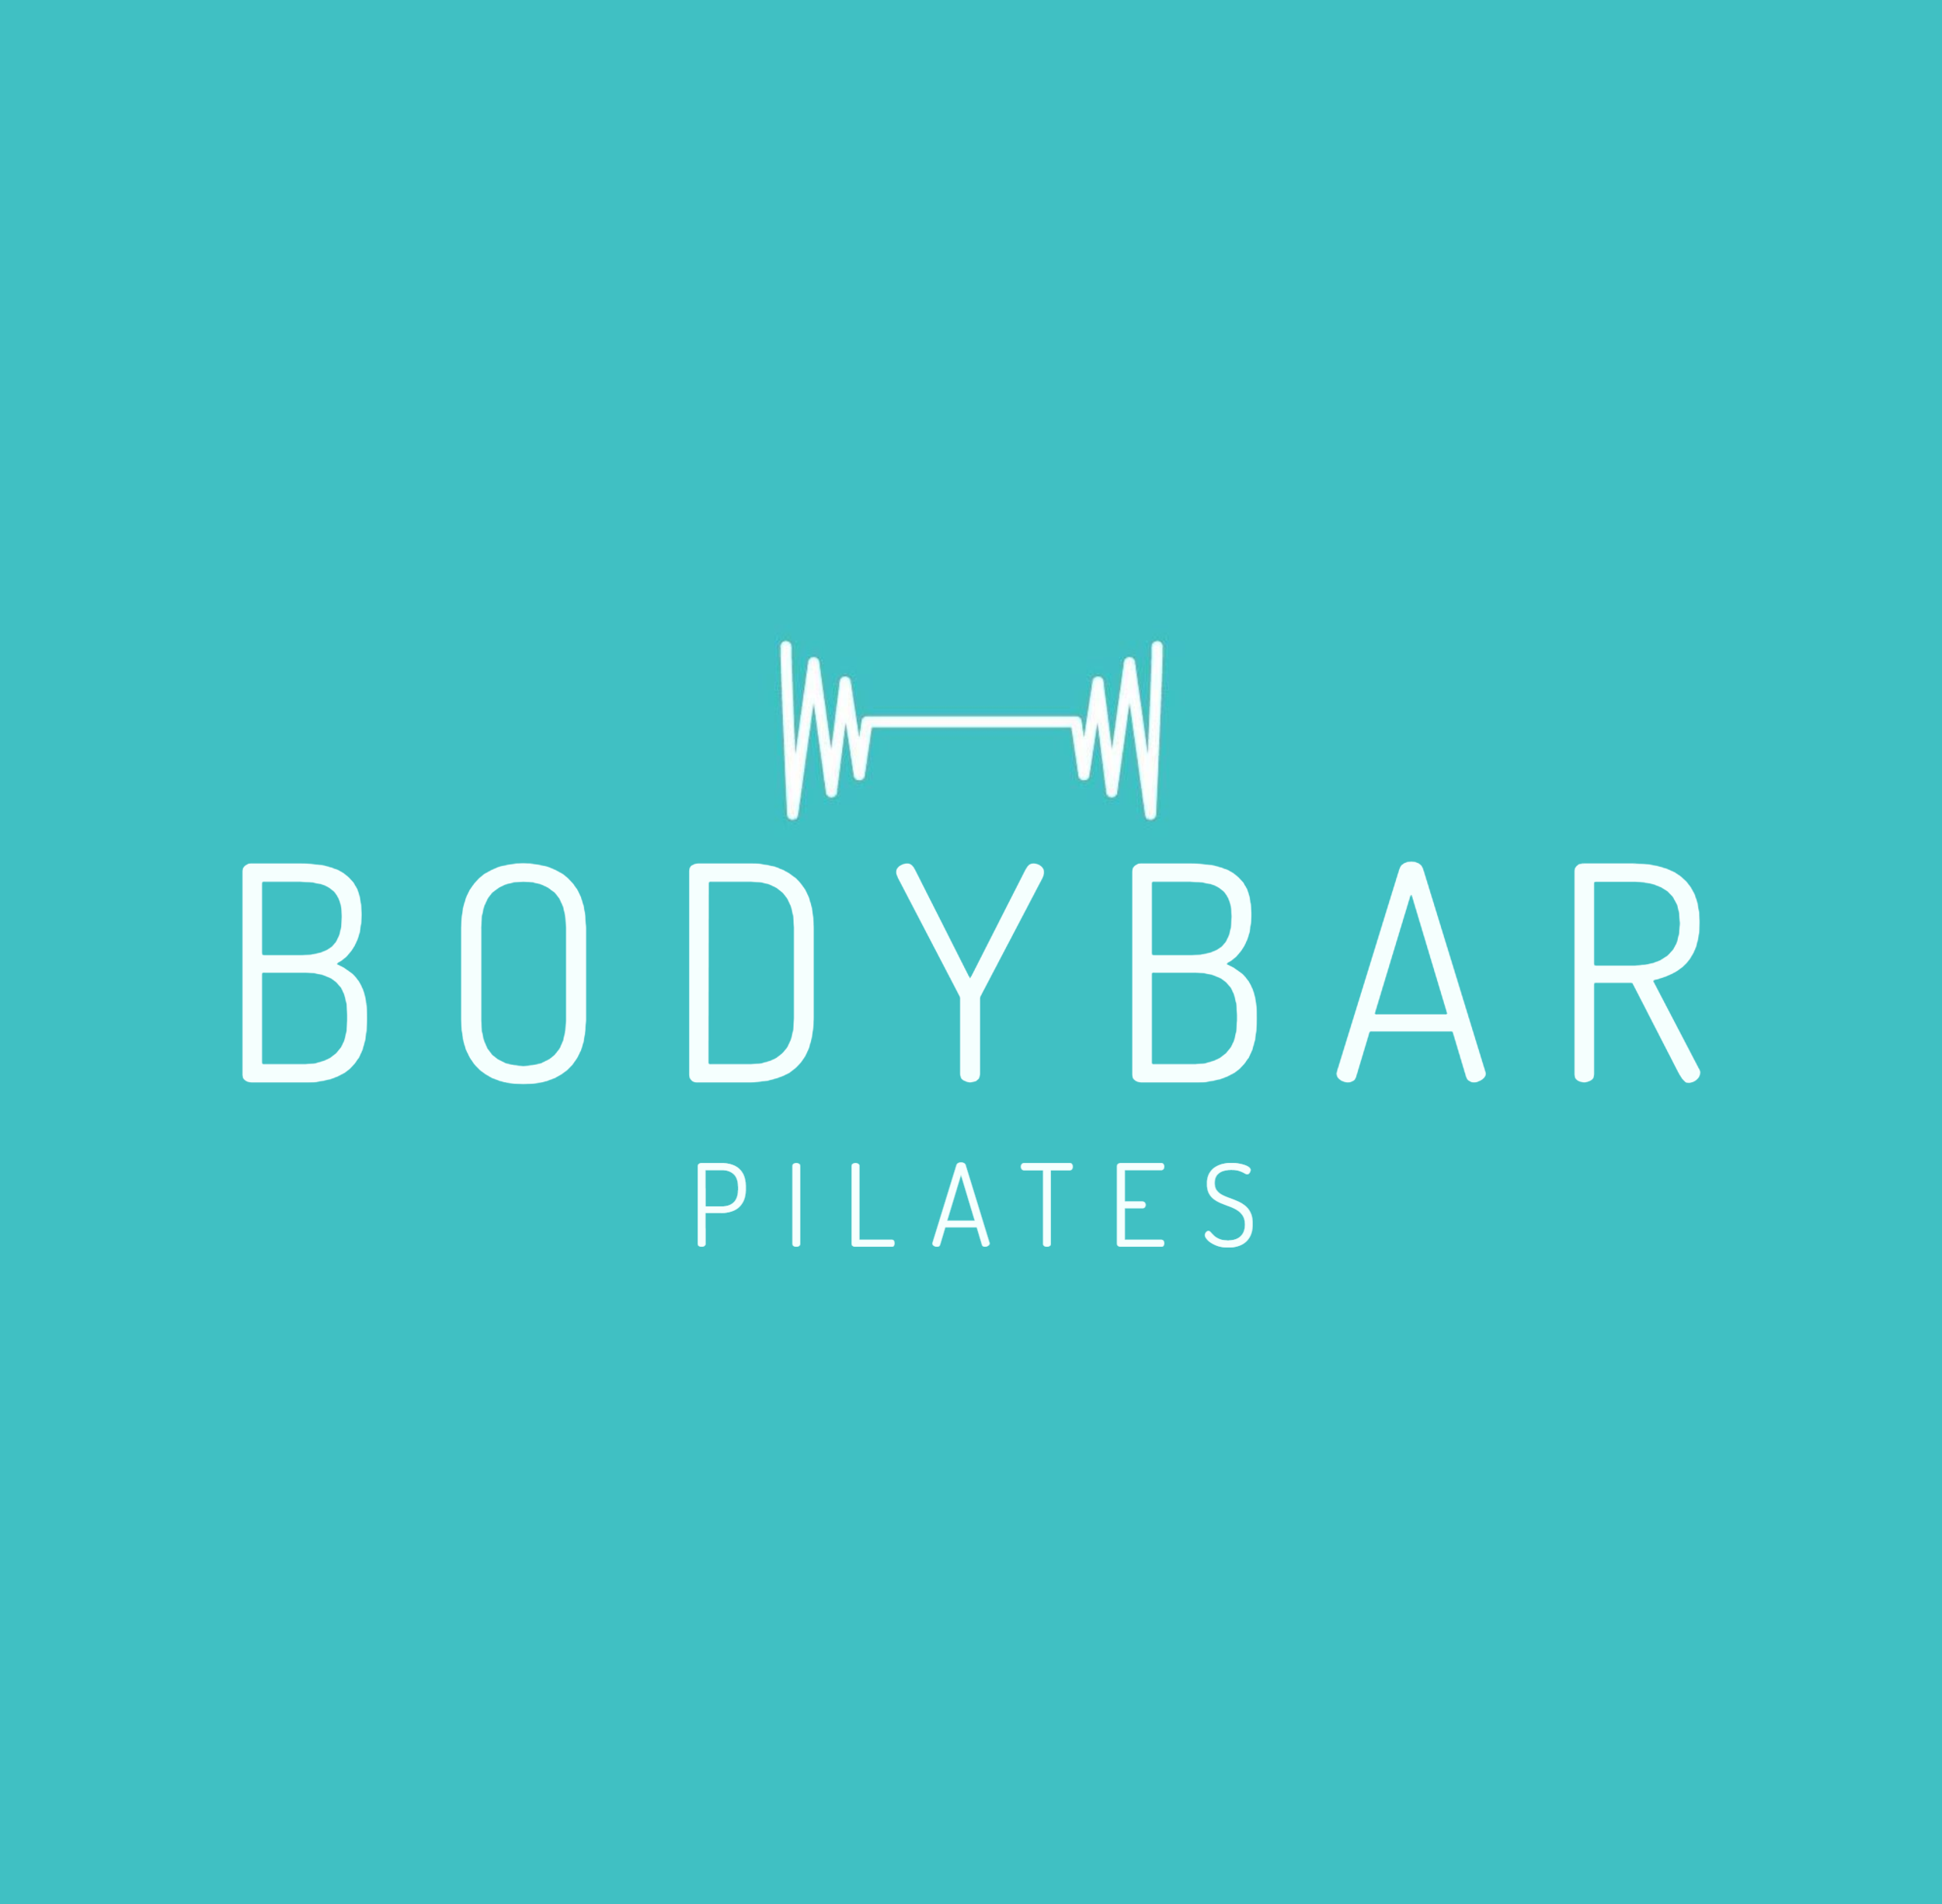 BODYBAR Pilates square logo (1).png